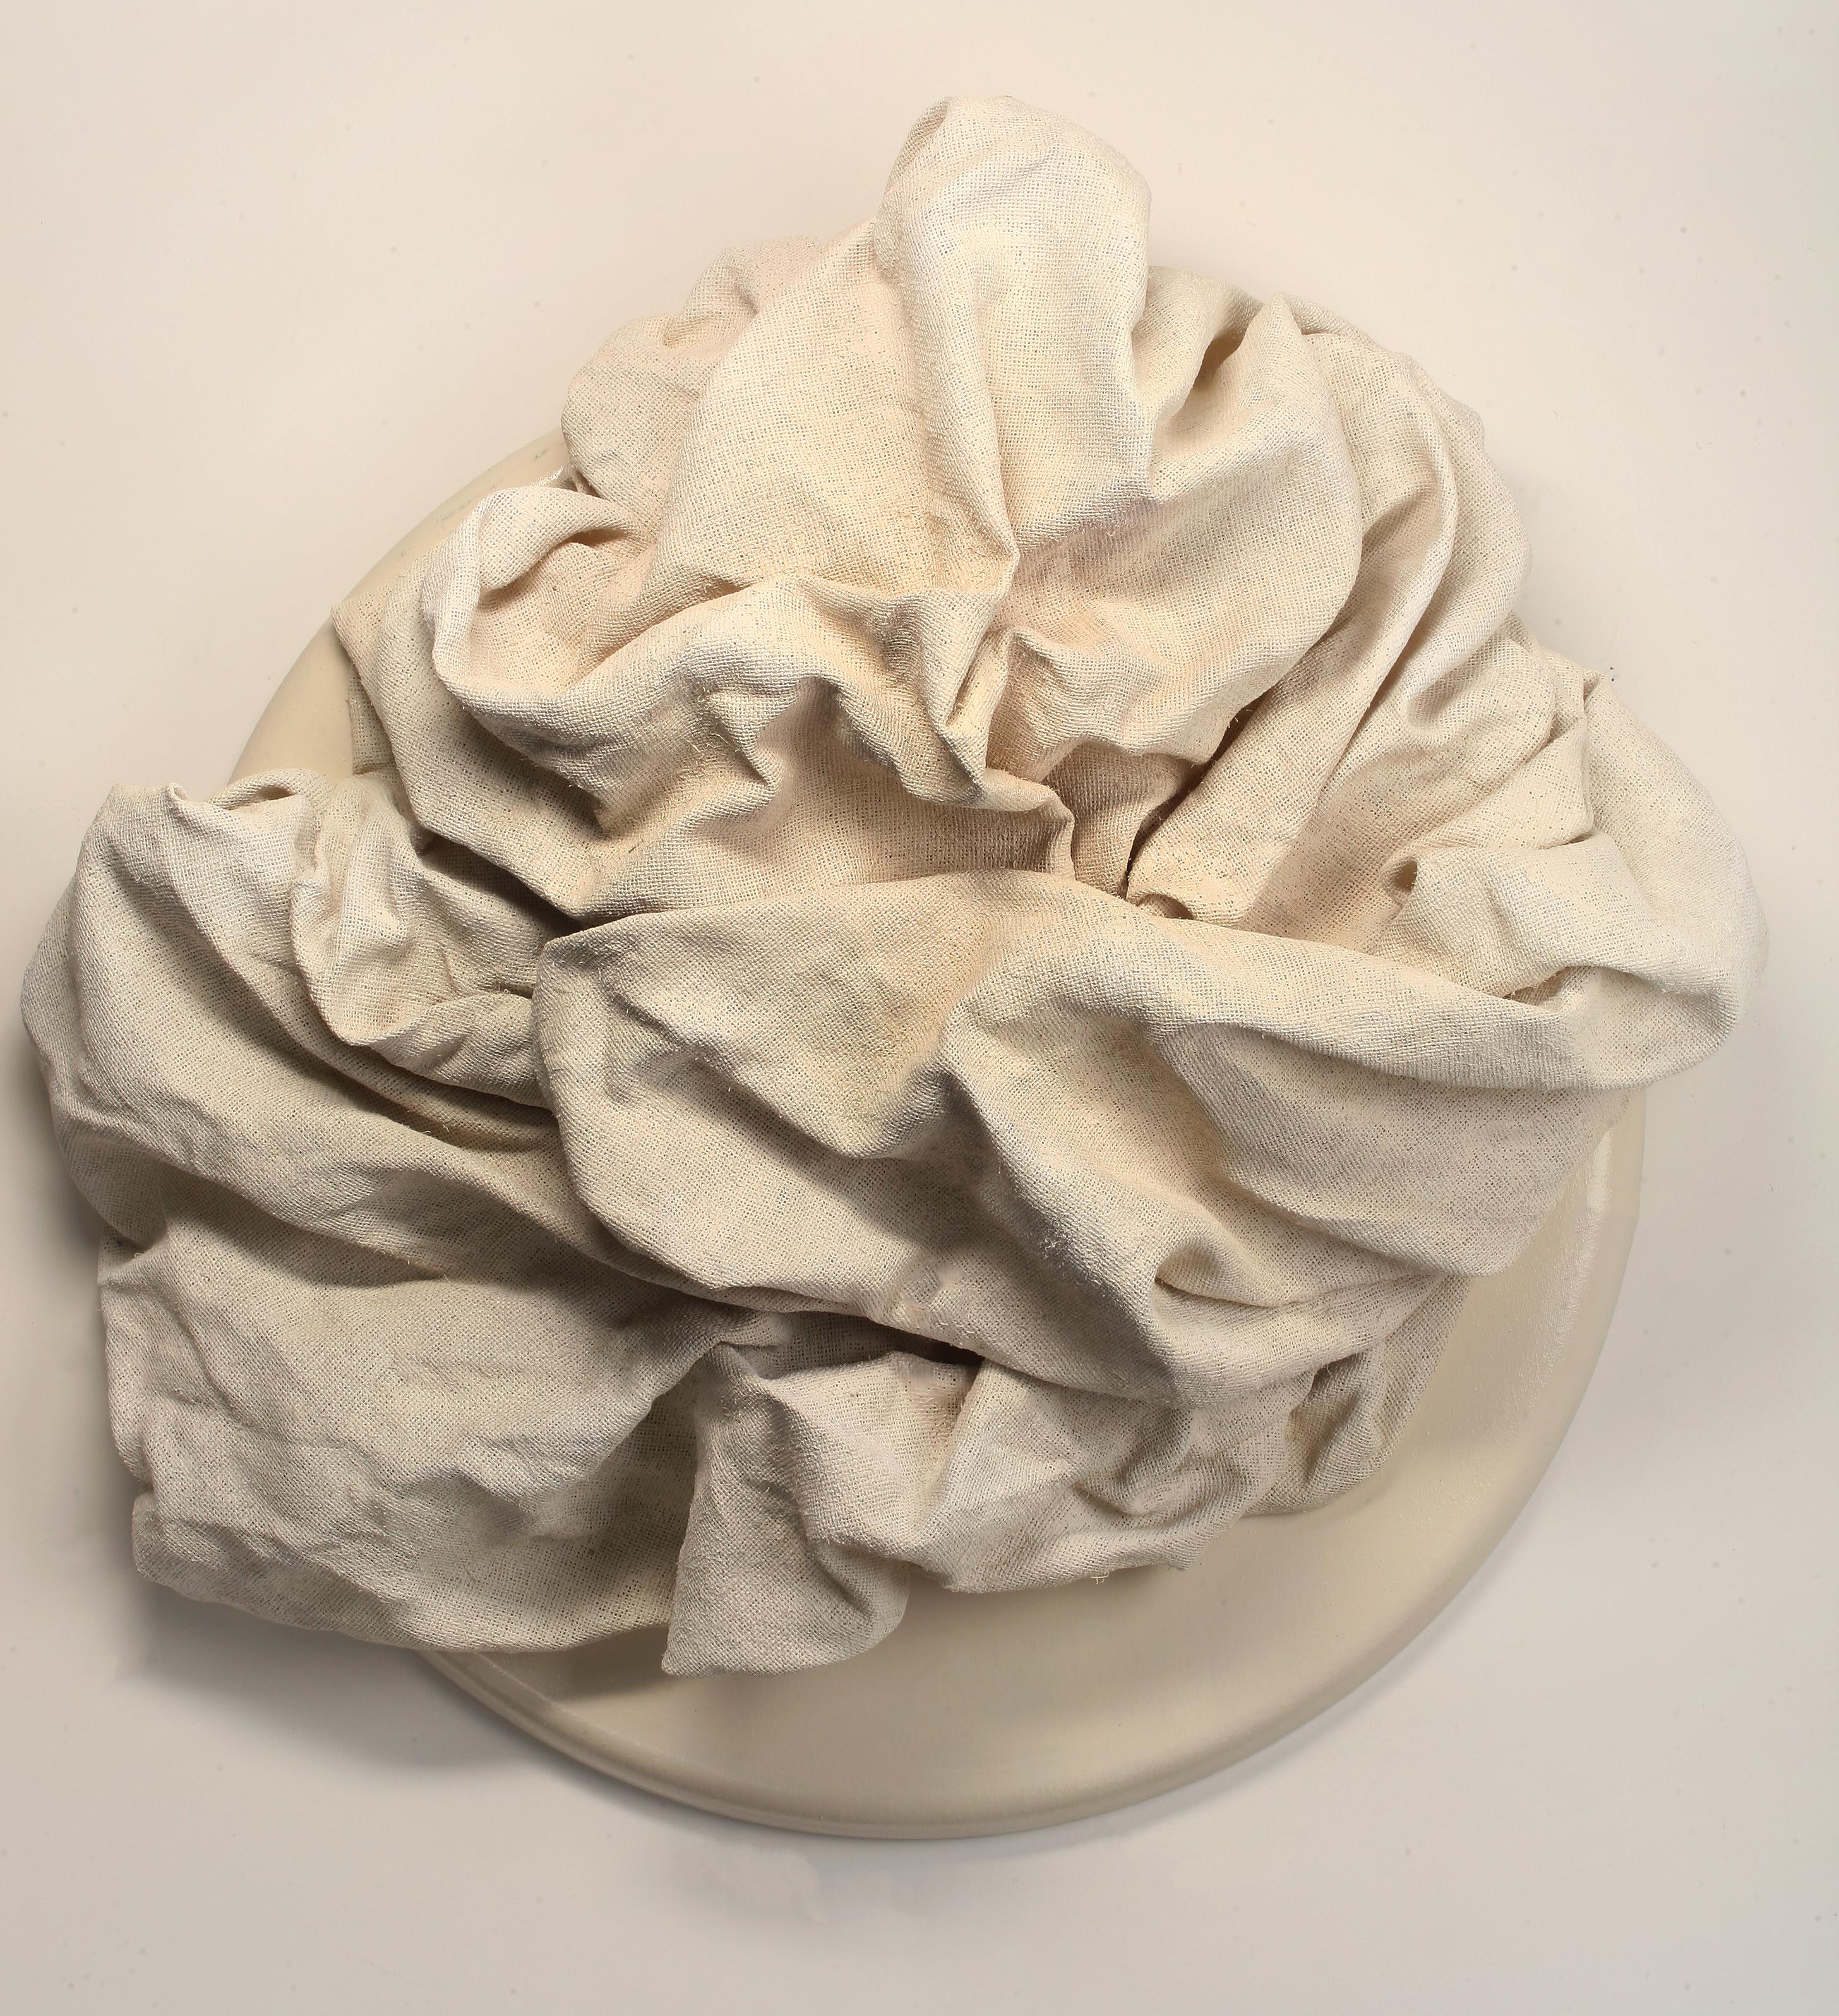 Chloe Hedden Abstract Sculpture – „Creme Folds“ Wandskulptur – Stoff, monochrom, elegant, kühn